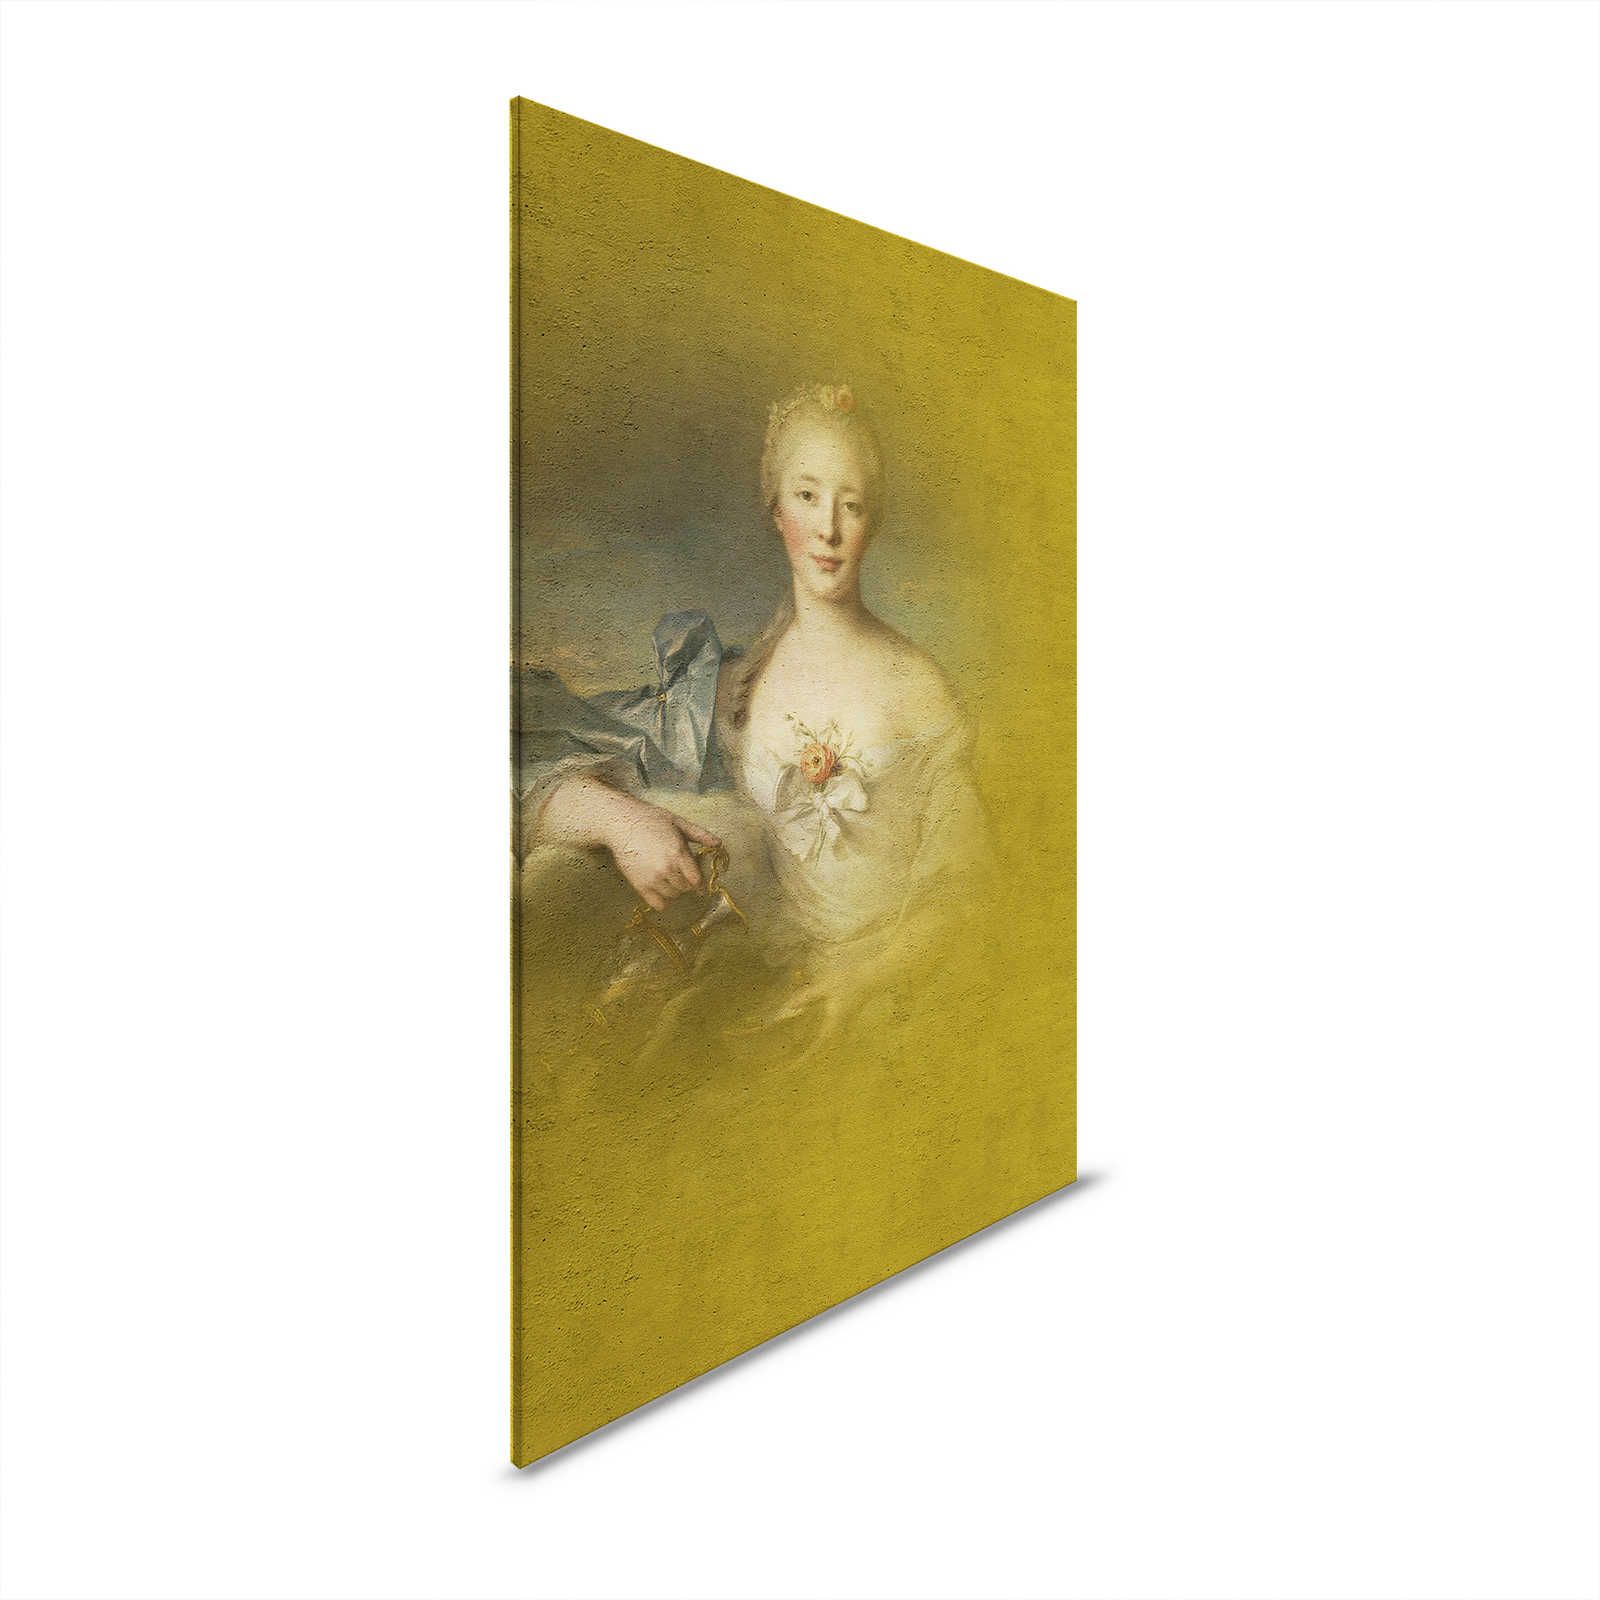 Cuadro lienzo retrato clásico joven dama - 0,80 m x 1,20 m
